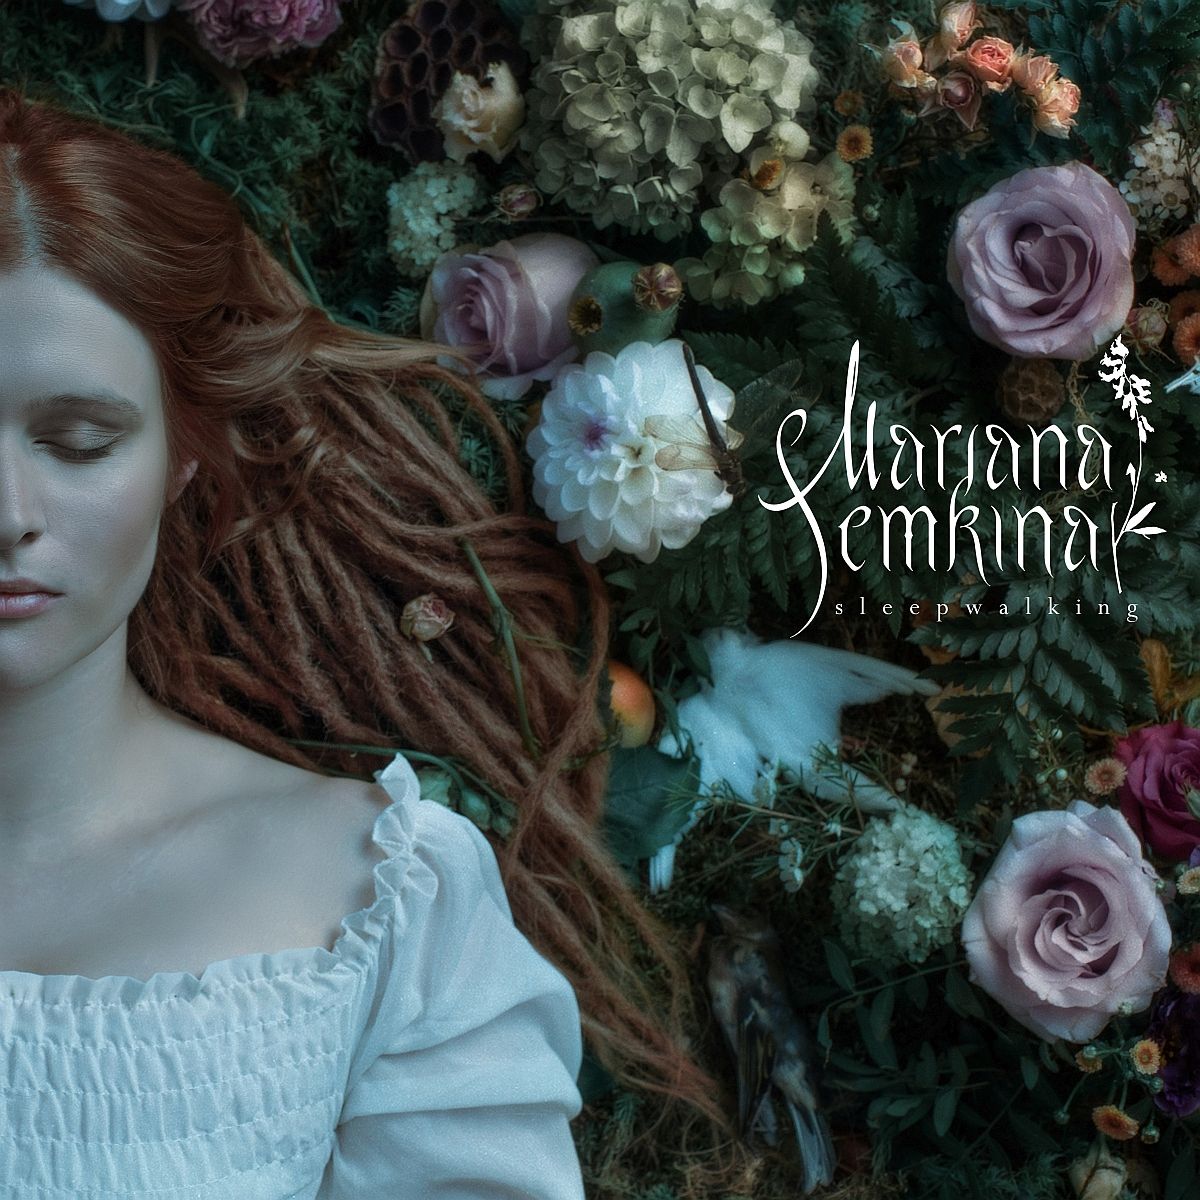 Mariana Semkina veröffentlicht "Sleepwalking"-Soloalbum im Februar